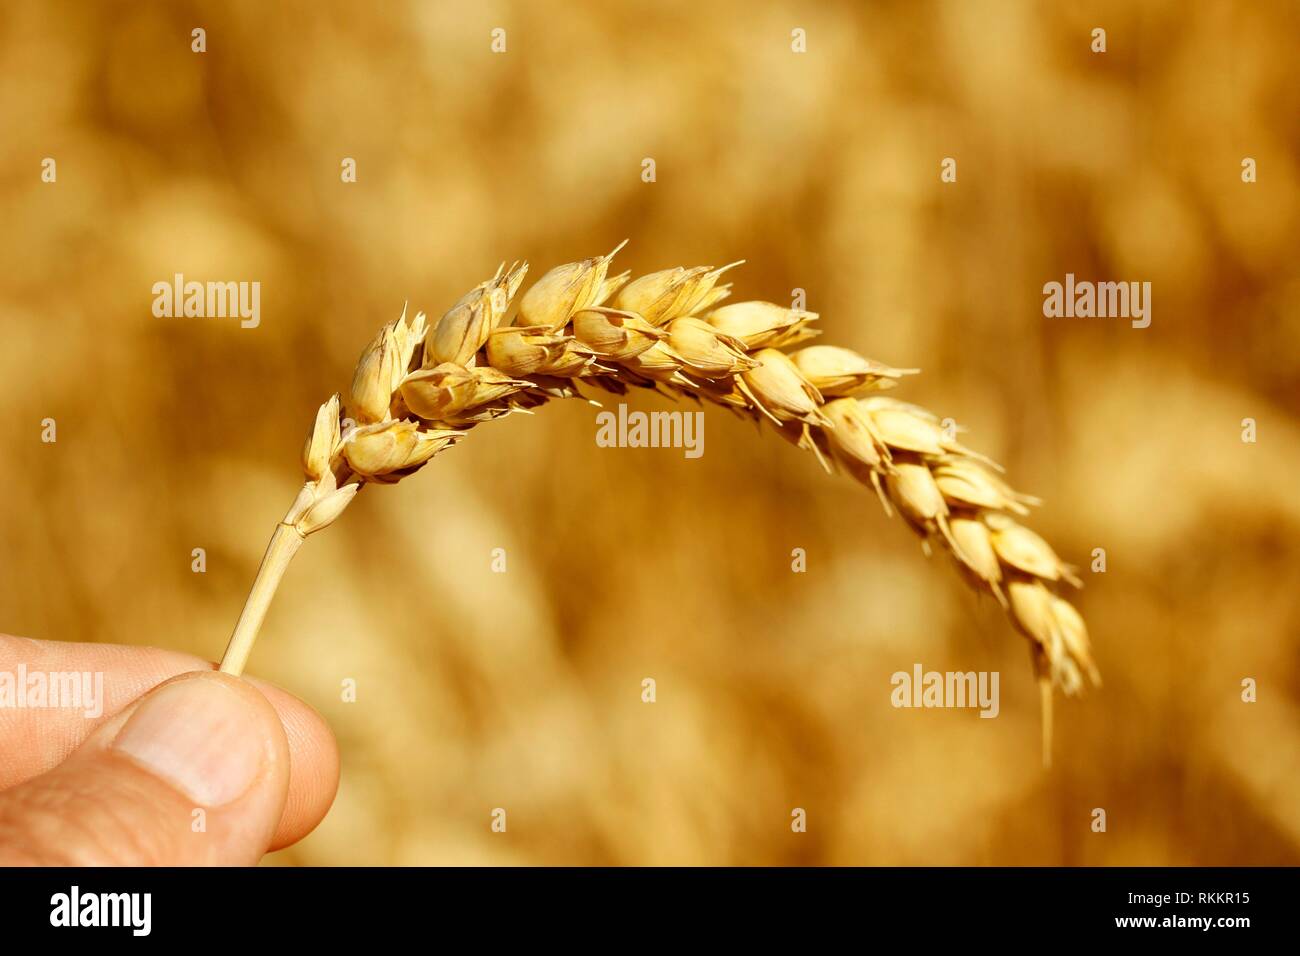 Holding a wheat ear. Stock Photo